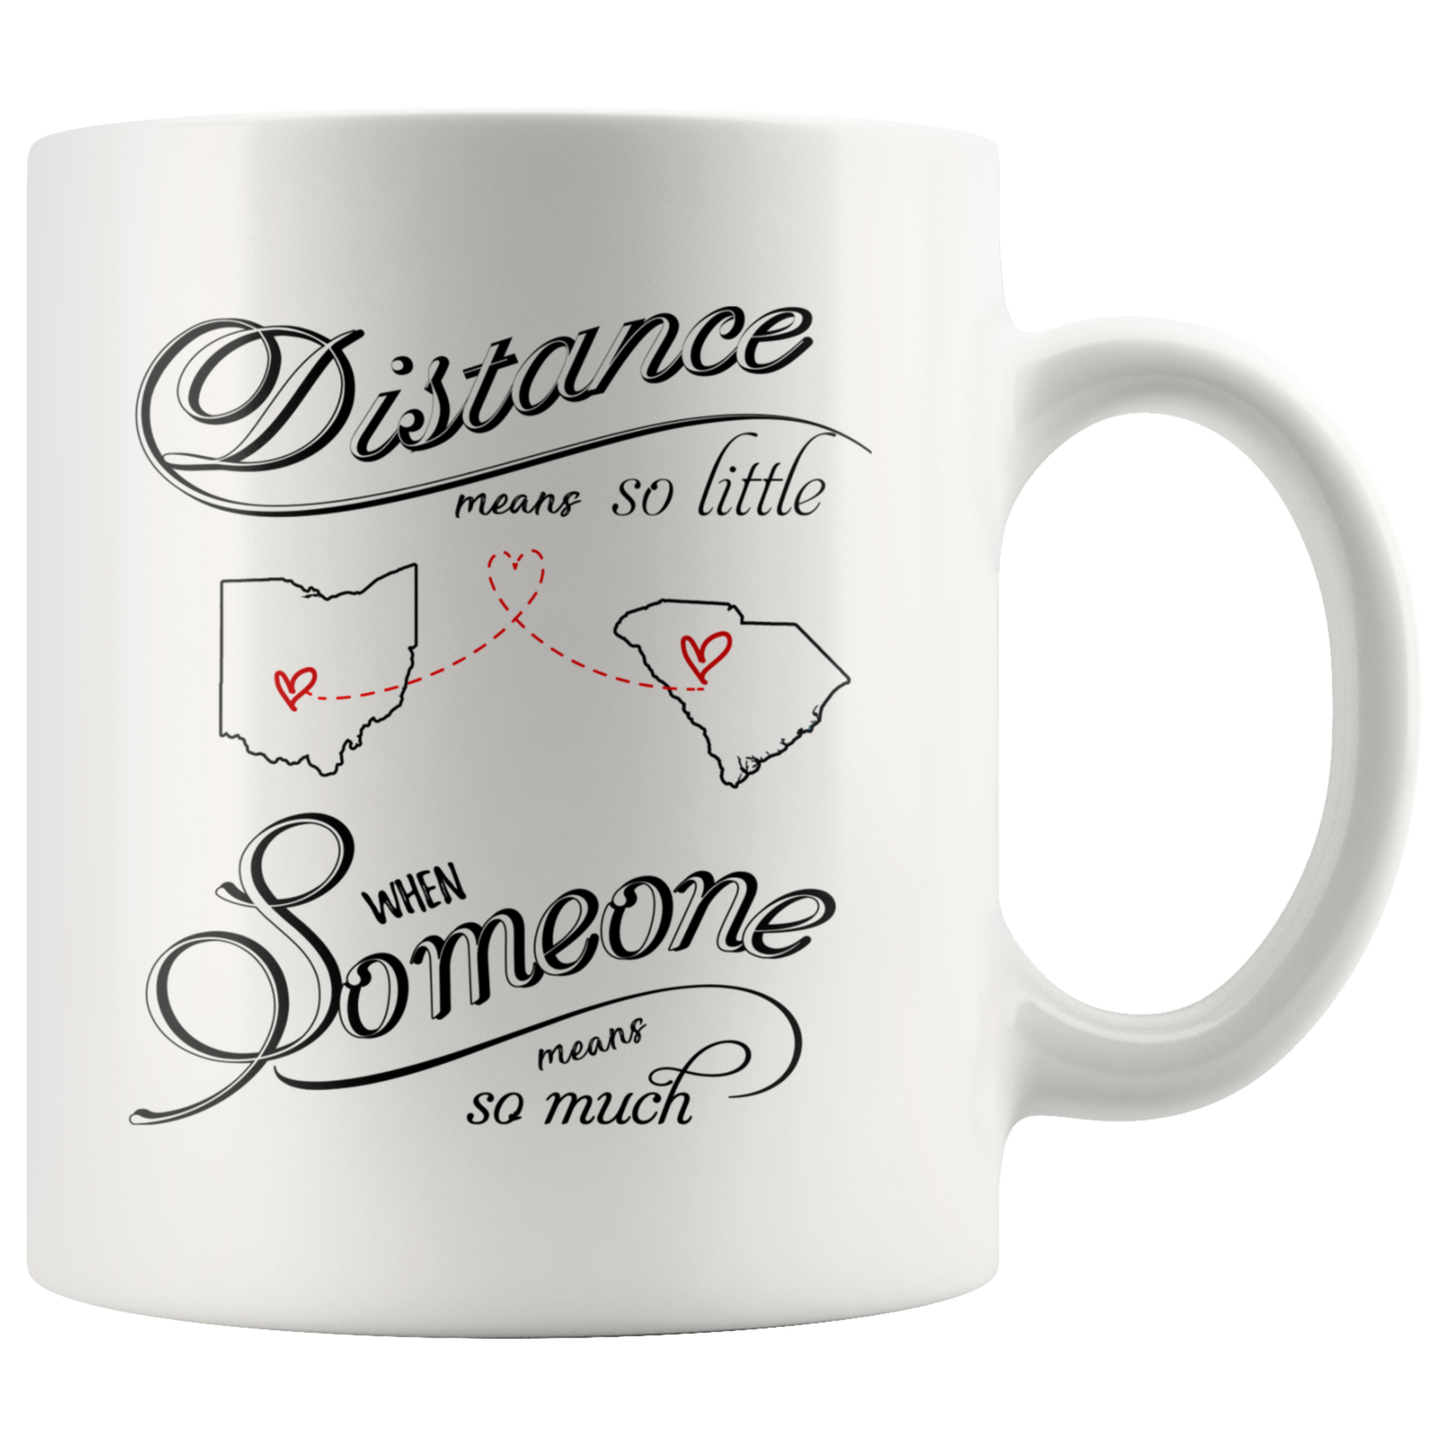 M-20485133-sp-23841 - [ Ohio | South Carolina ]Mothers Day Coffee Mug Ohio South Carolina Distance Means So